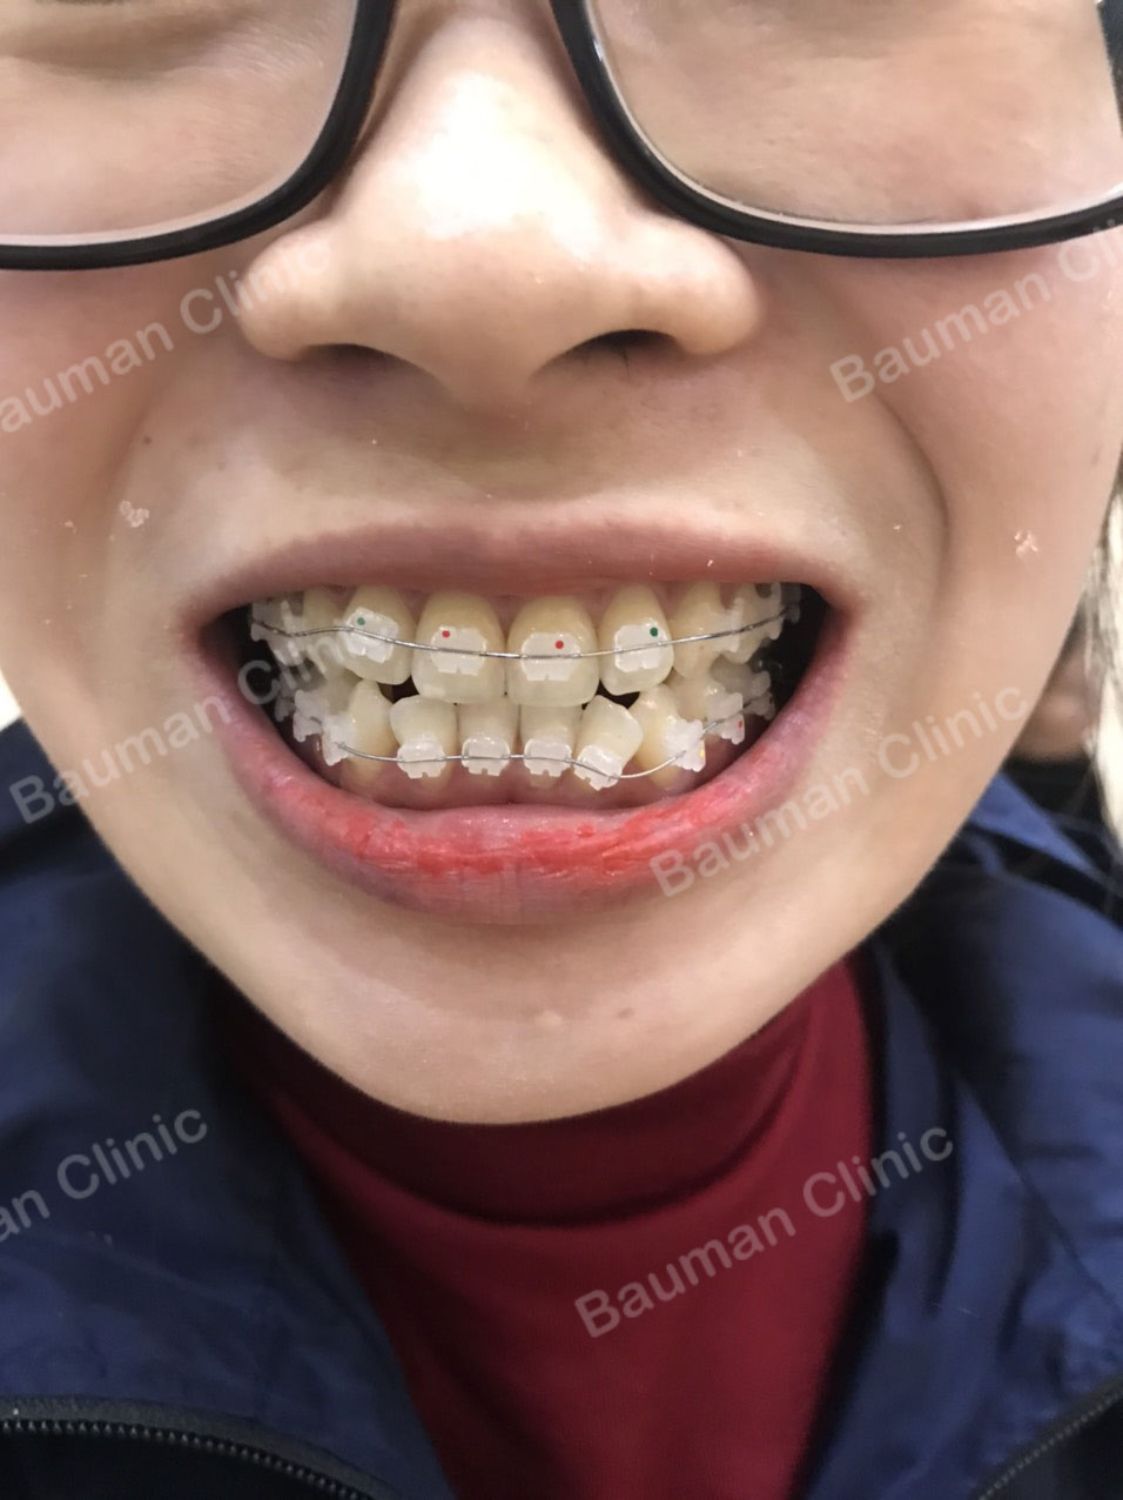 Ca niềng răng số 5091 - Nha khoa Bauman Clinic